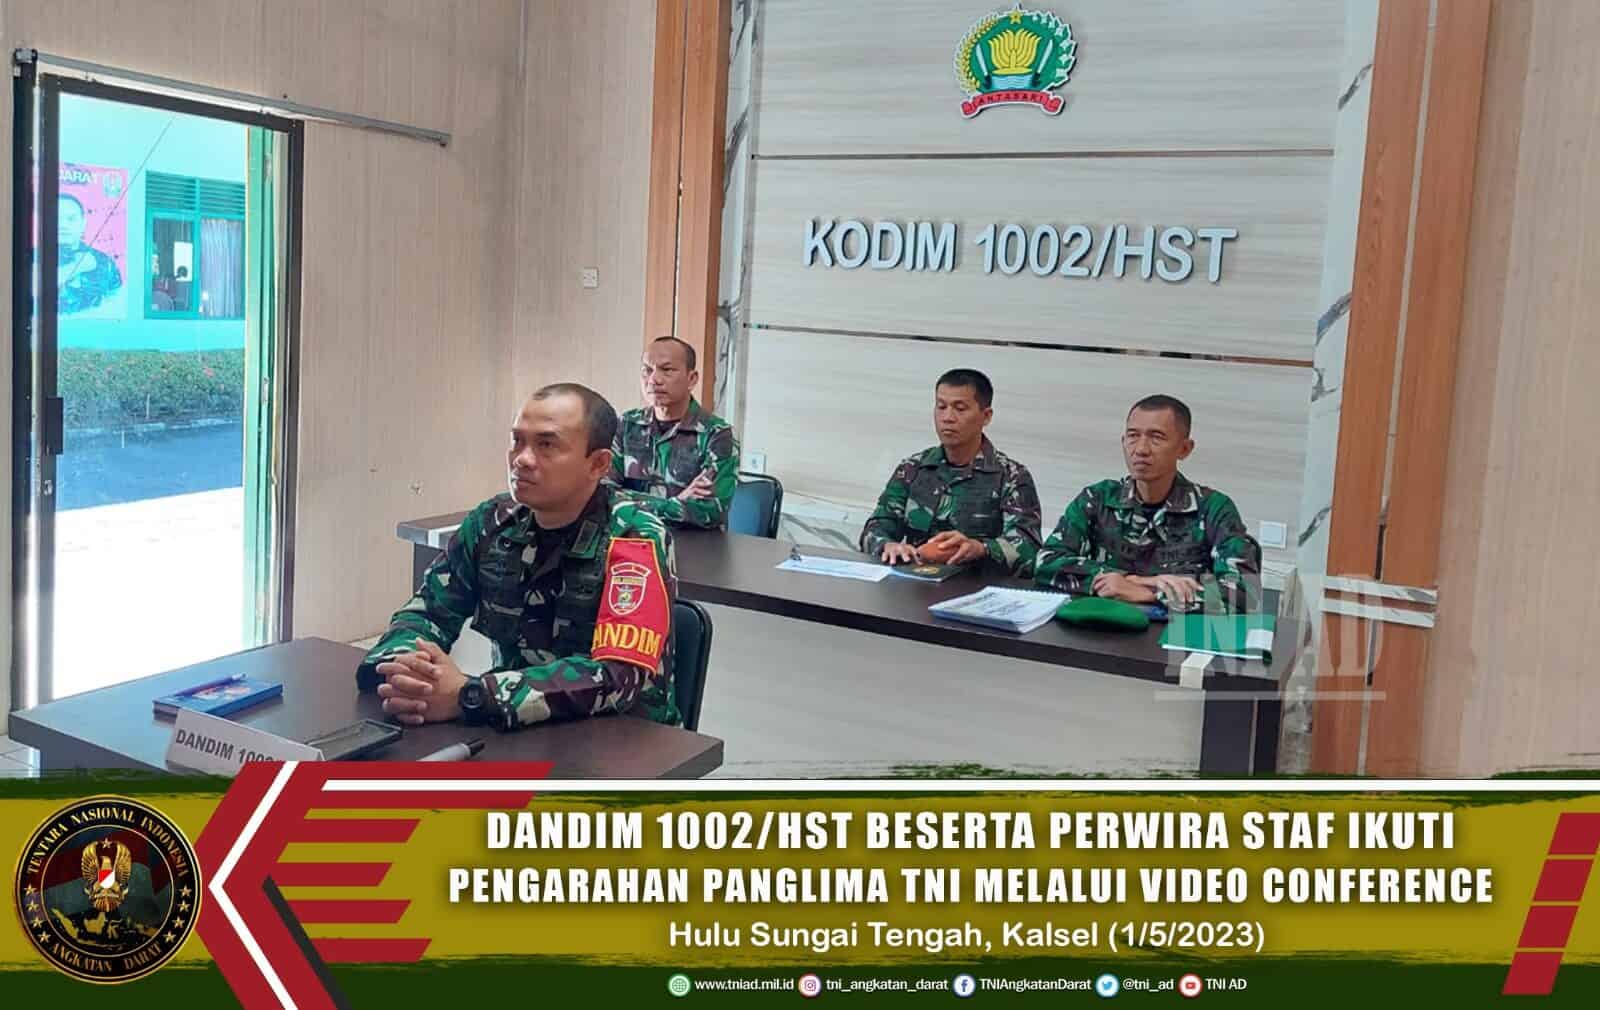 Dandim 1002/HST Beserta Perwira Staf Ikuti Pengarahan Panglima TNI melalui Video Conference, Berikan Bakti Terbaikmu Untuk Ibu Pertiwi